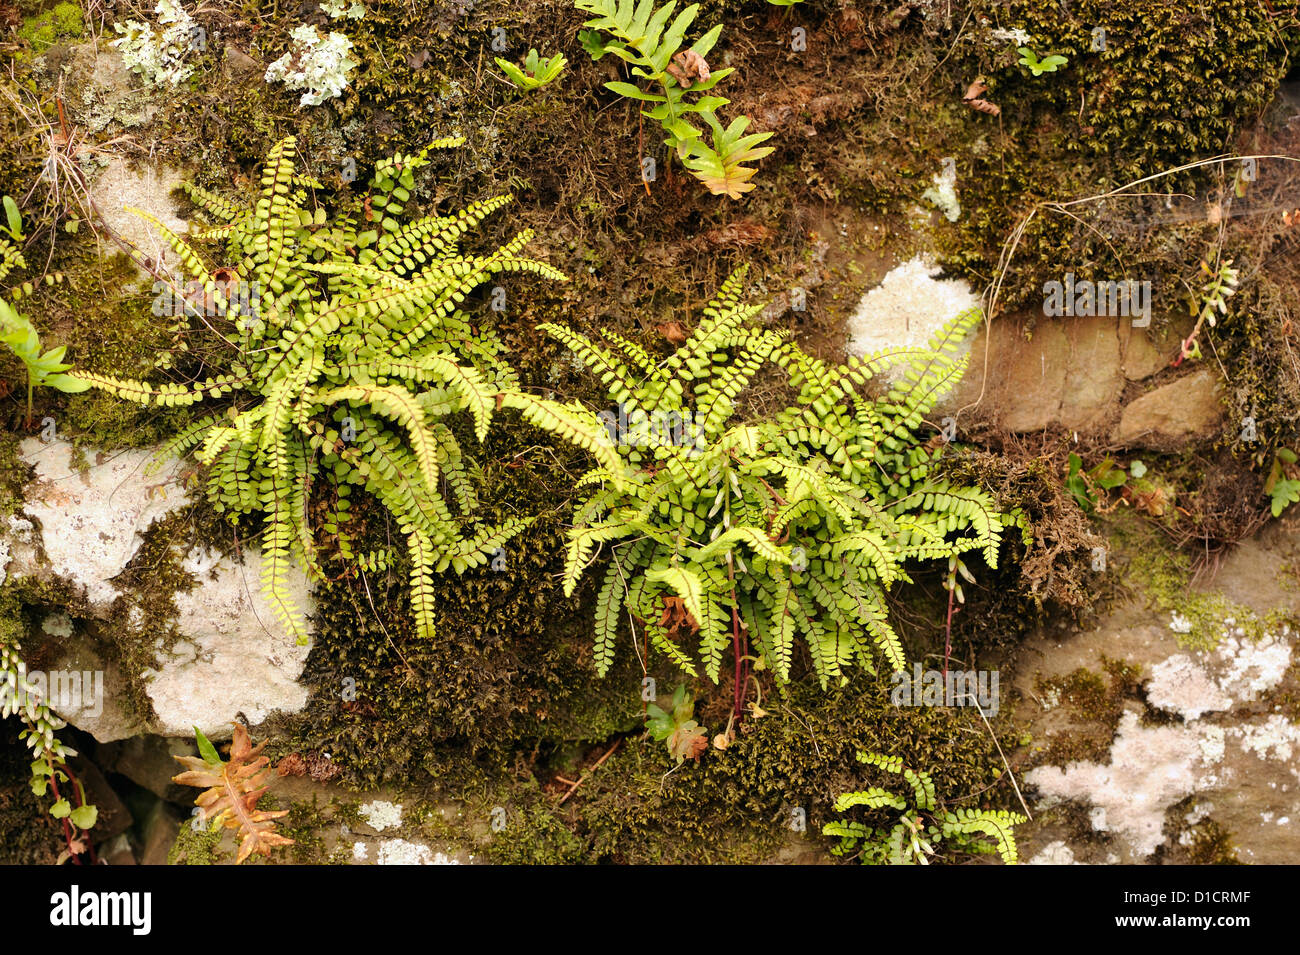 Maidenhair spleenwort (Asplenium trichomanes) and other ferns, mosses and lichens growing on a damp stone wall. Libardon, Colunga, Asturias, Spain. Stock Photo